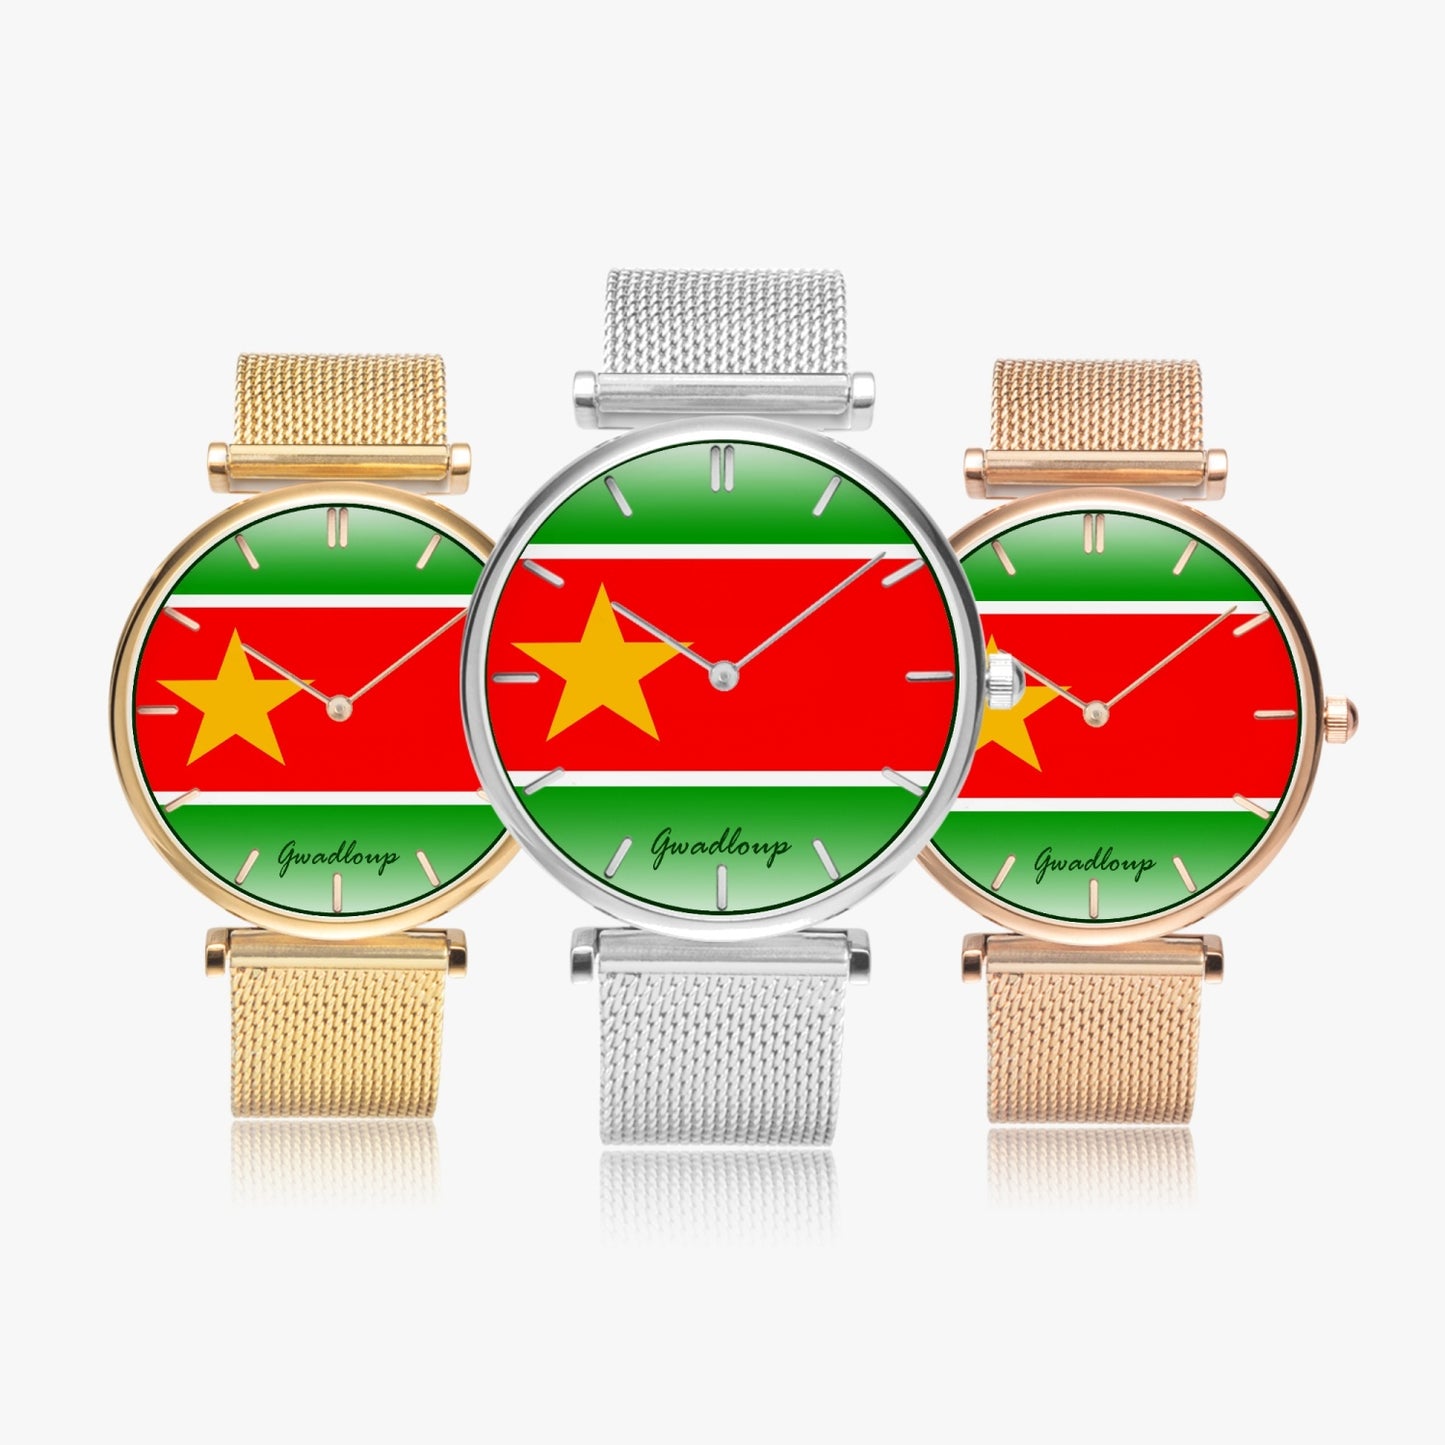 Ultra thin fashion quartz watch "Gwadloup" (with indicators)